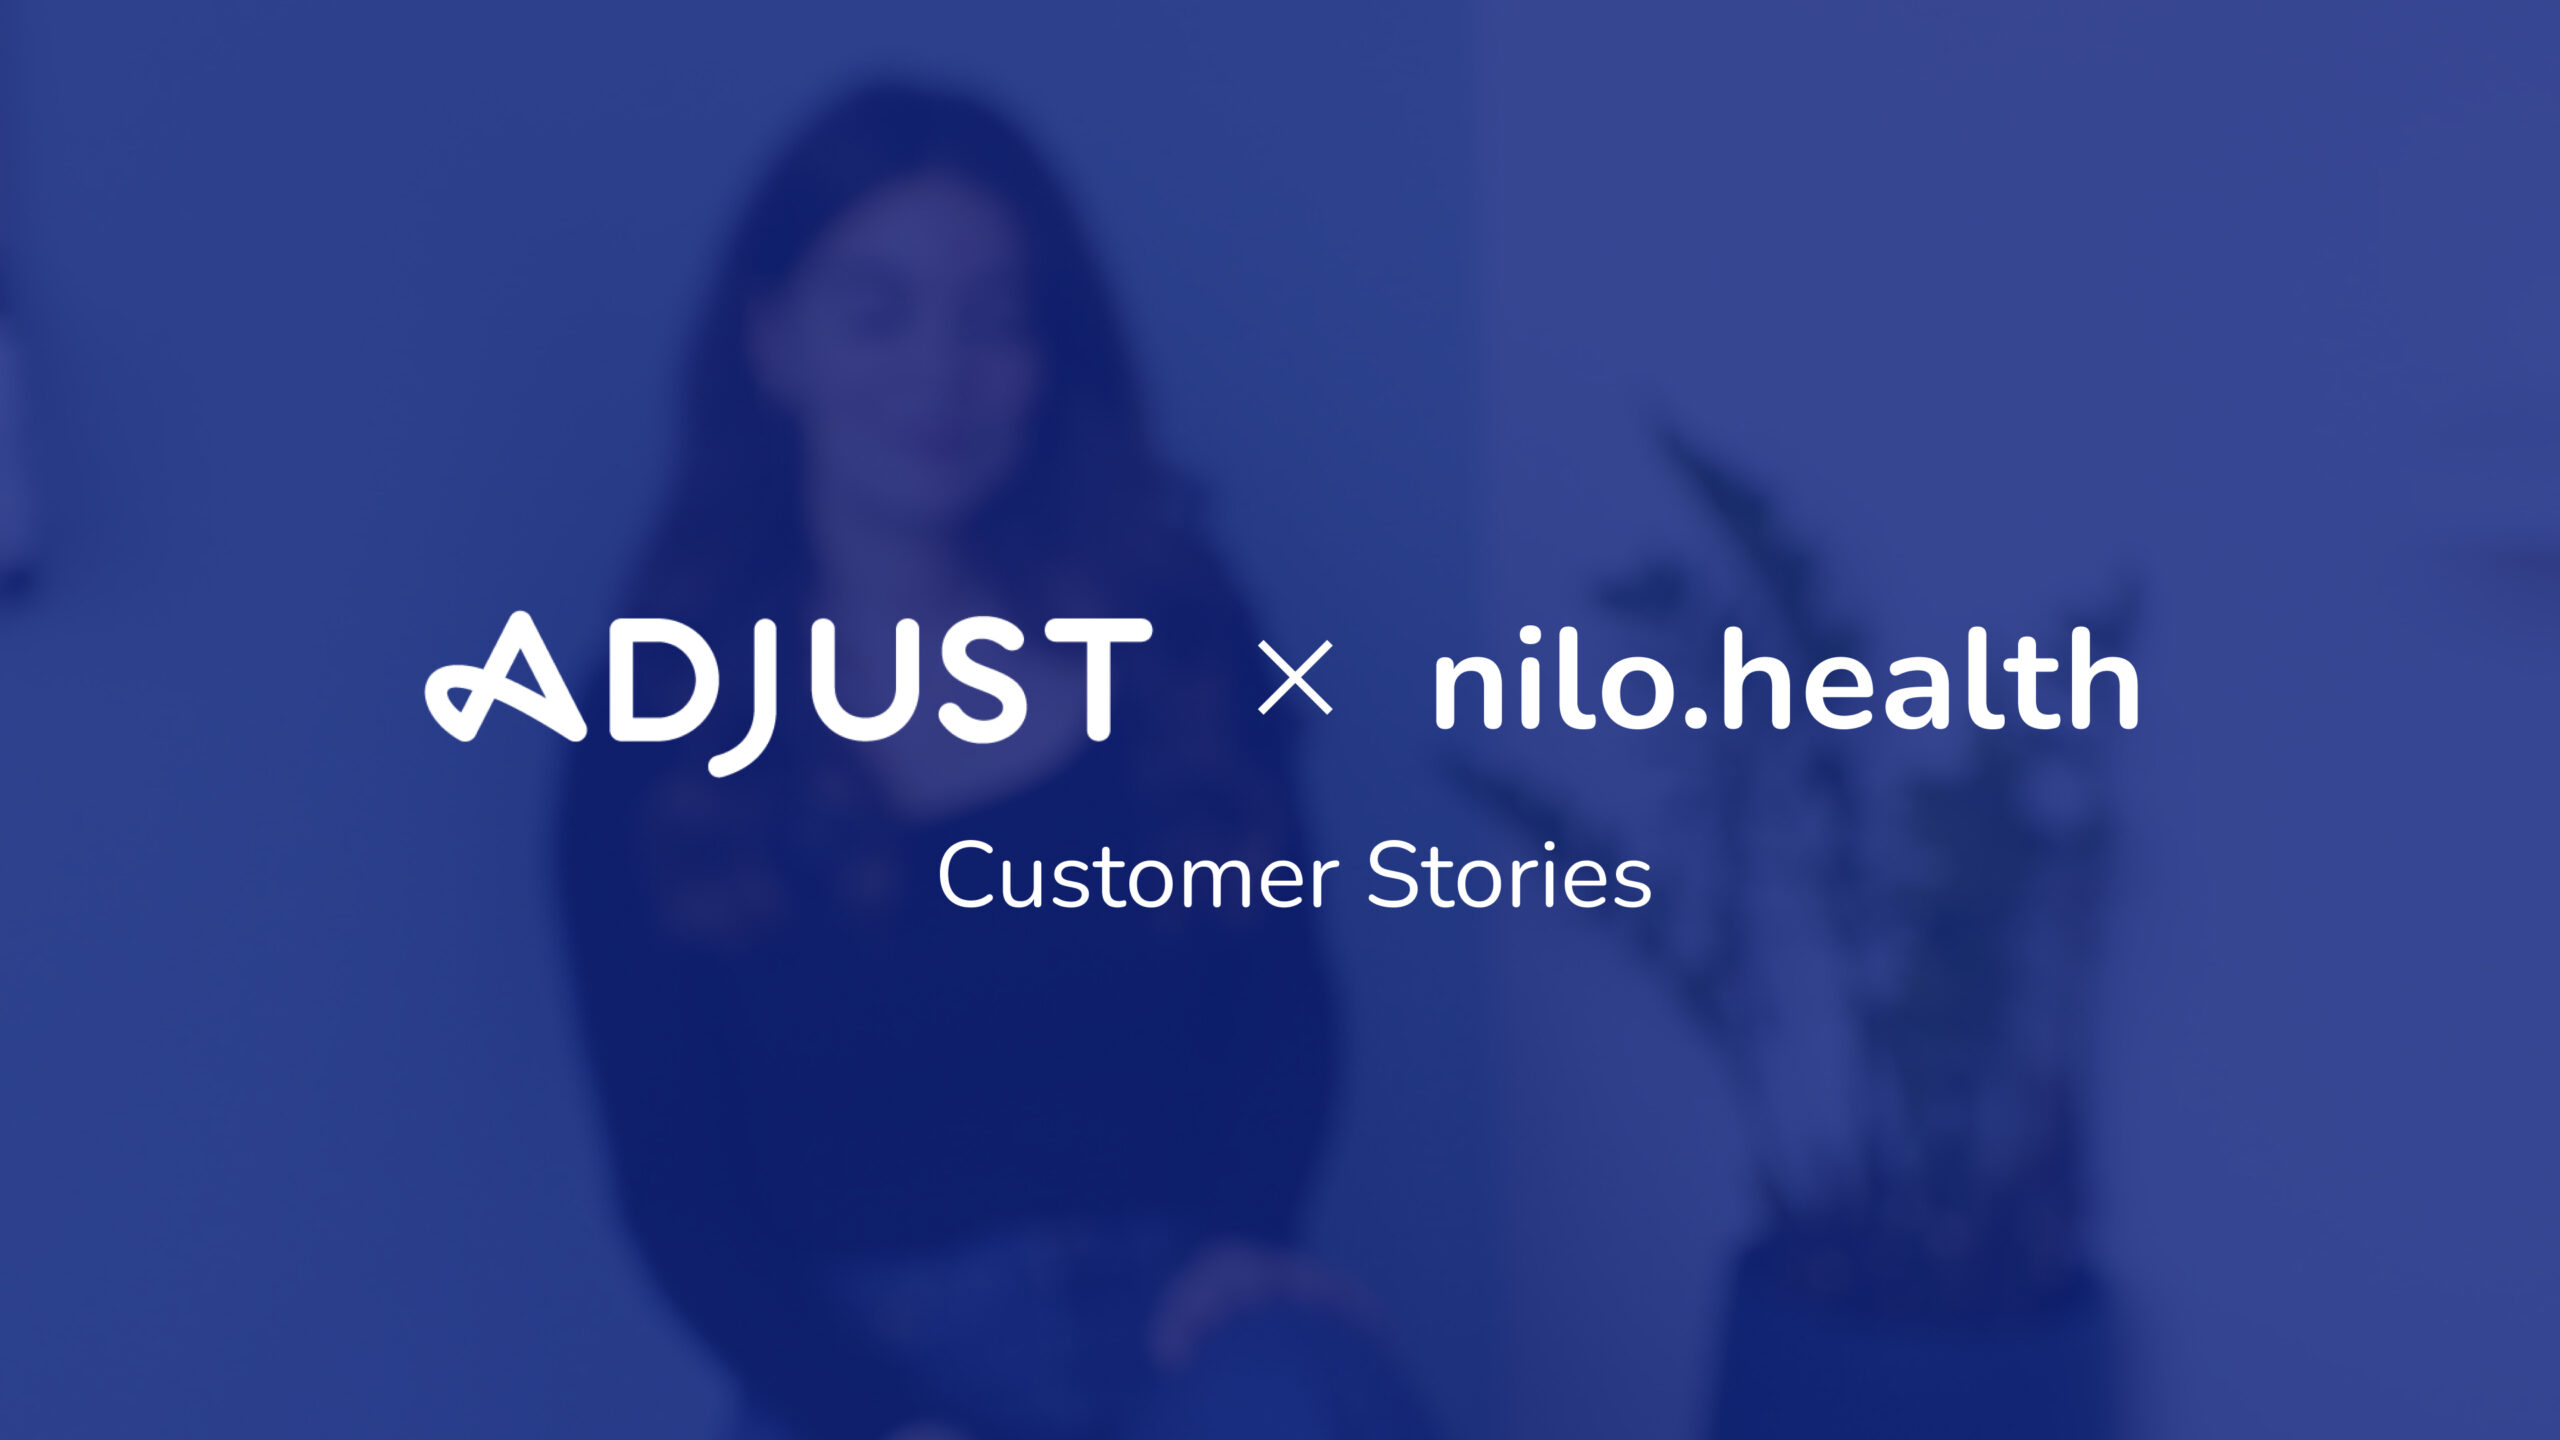 Customer Stories: Adjust